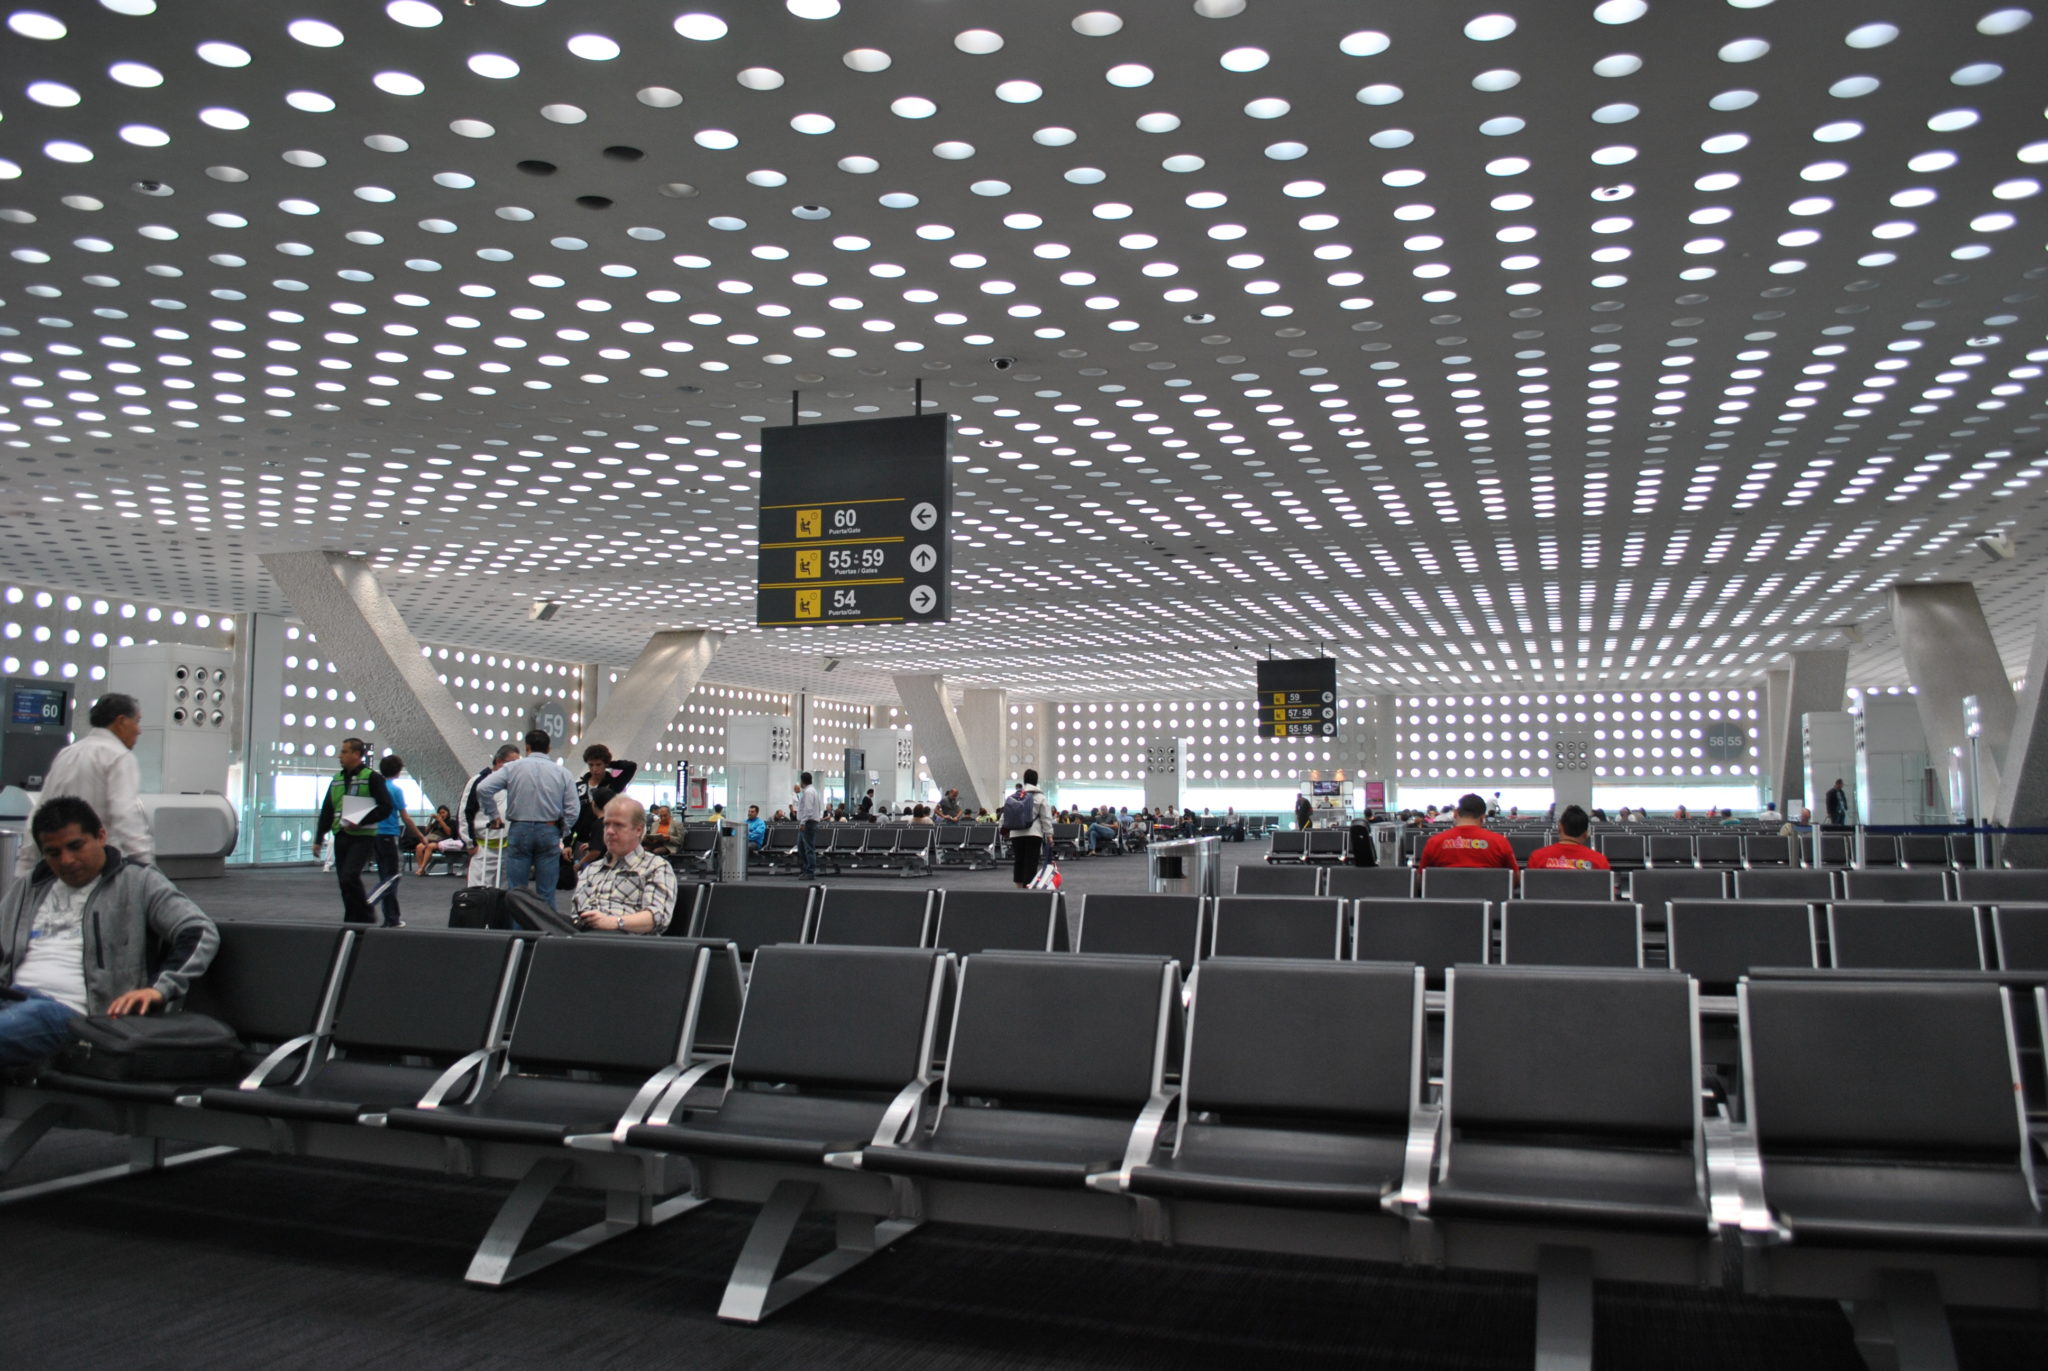 mexico city international airport map terminal 2